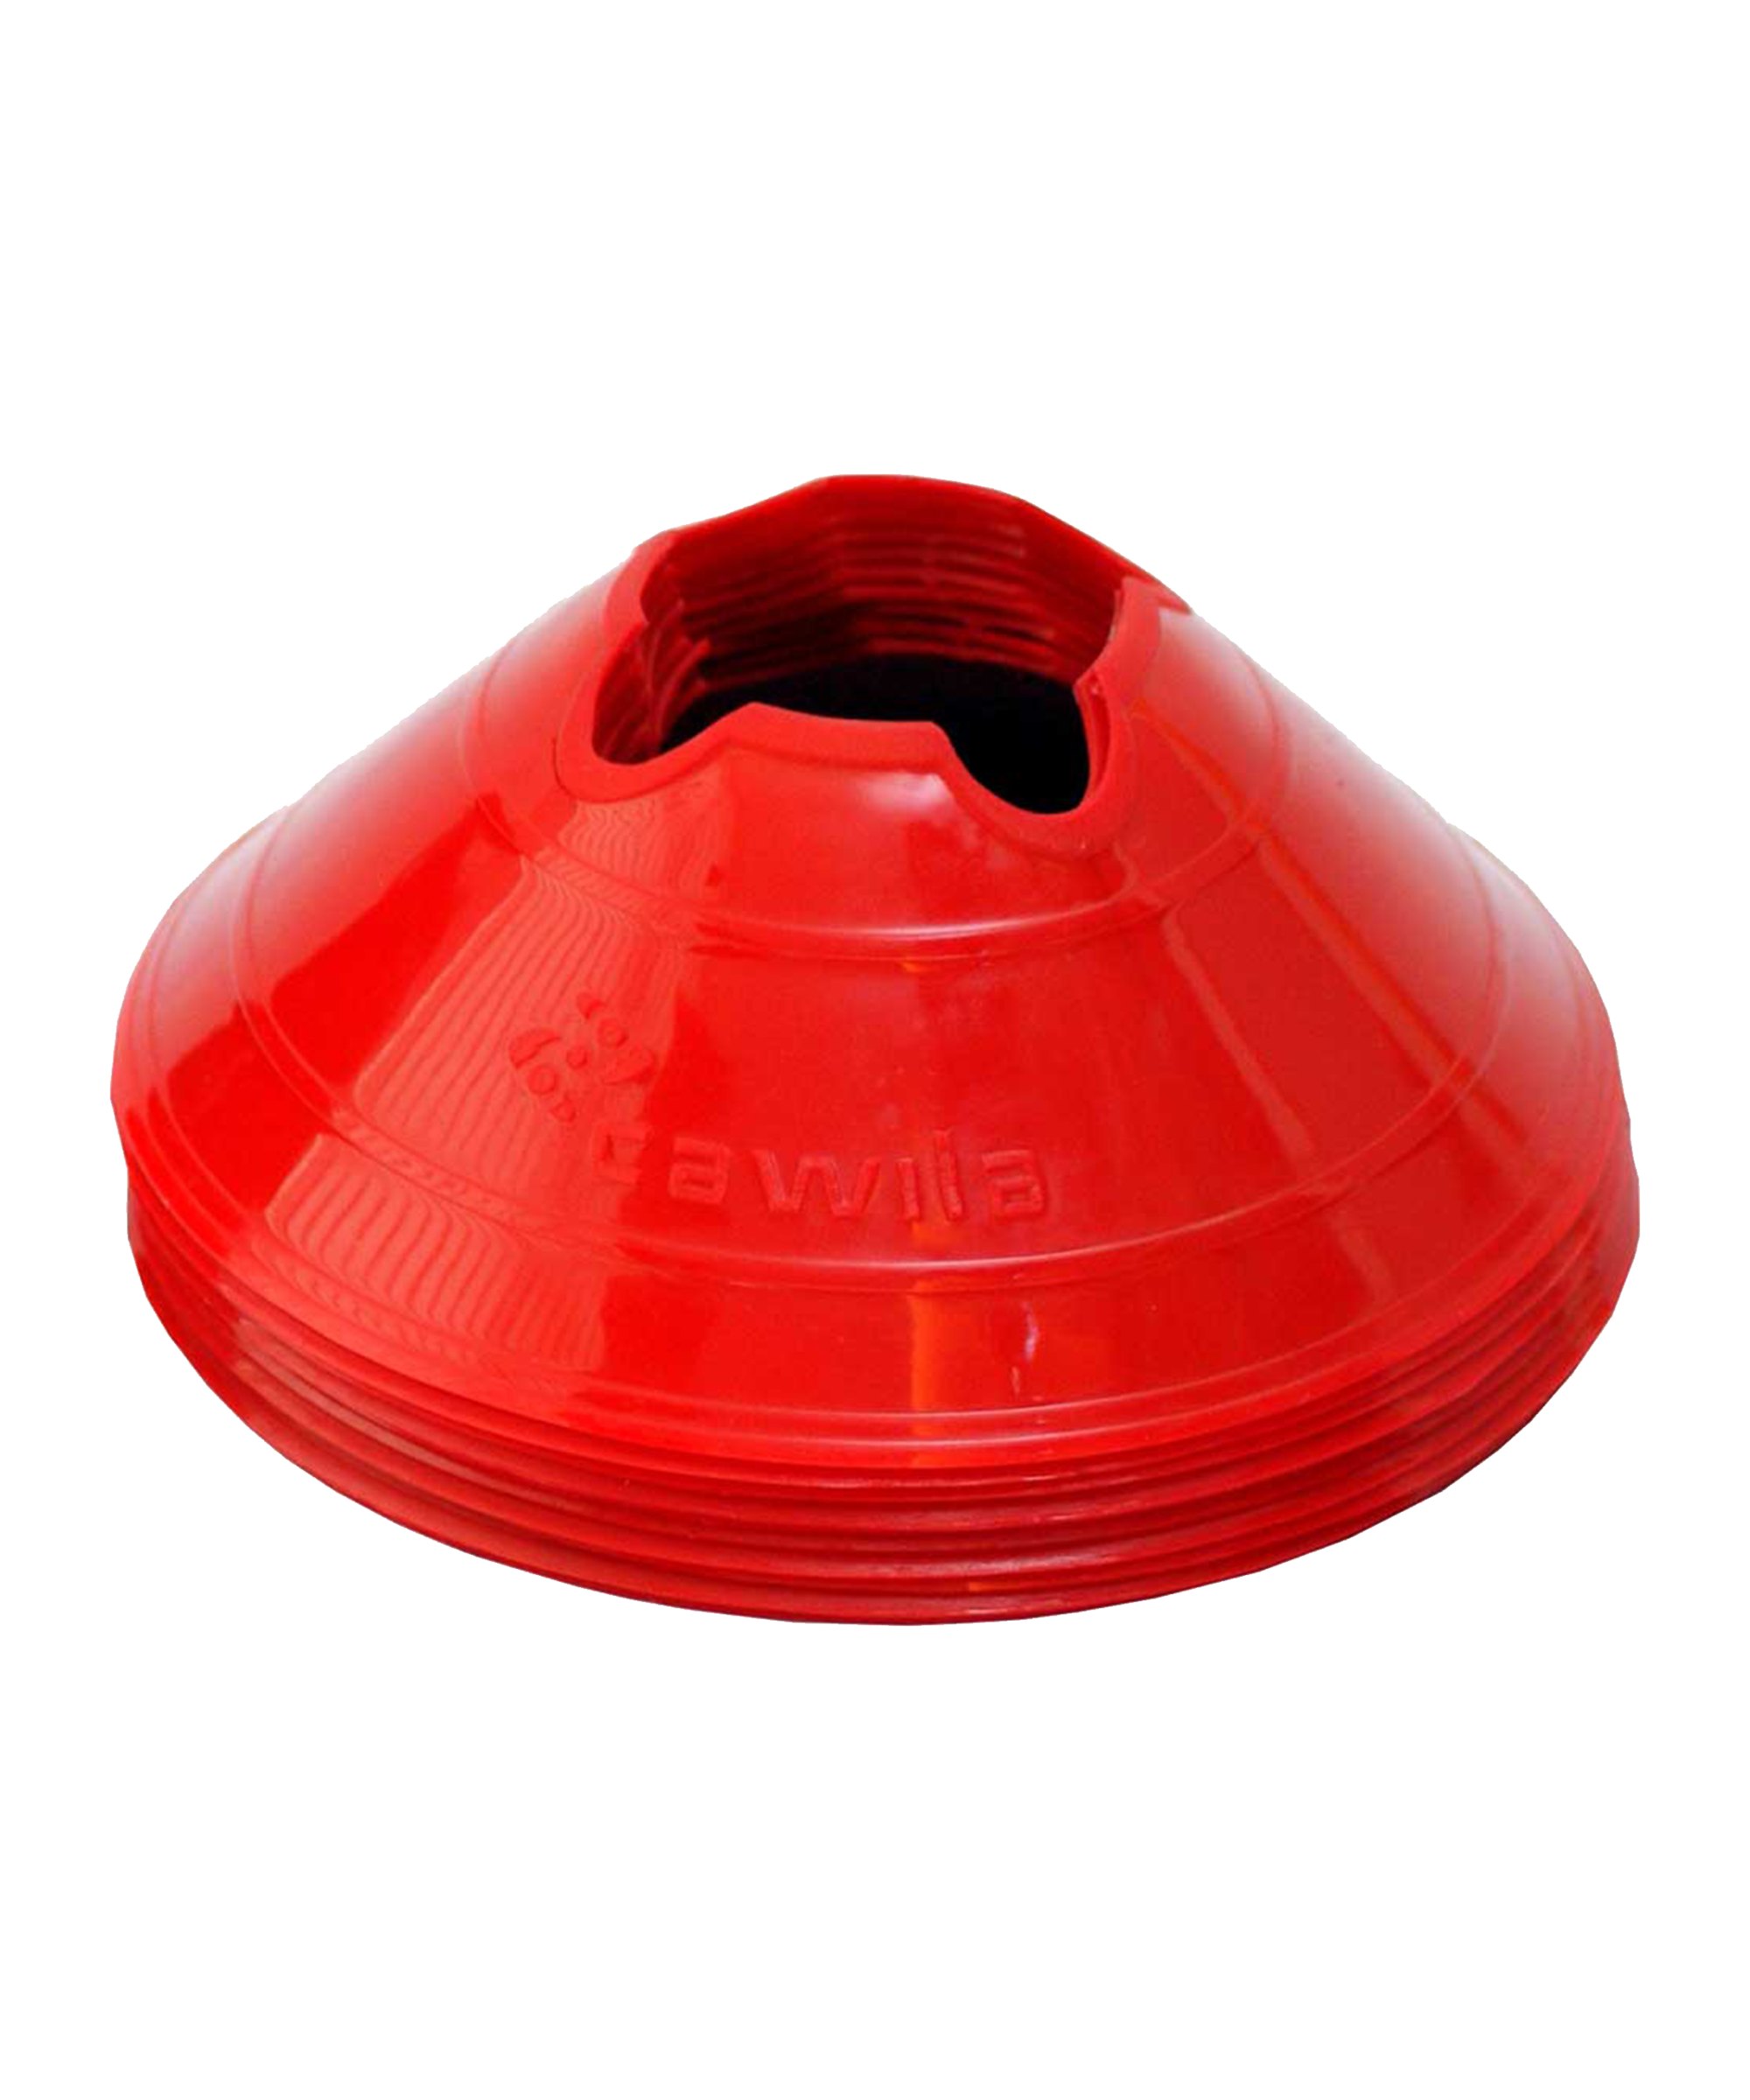 Cawila Markierungshauben M | 10er Set | Durchmesser 20cm, Höhe 6cm | rot - rot